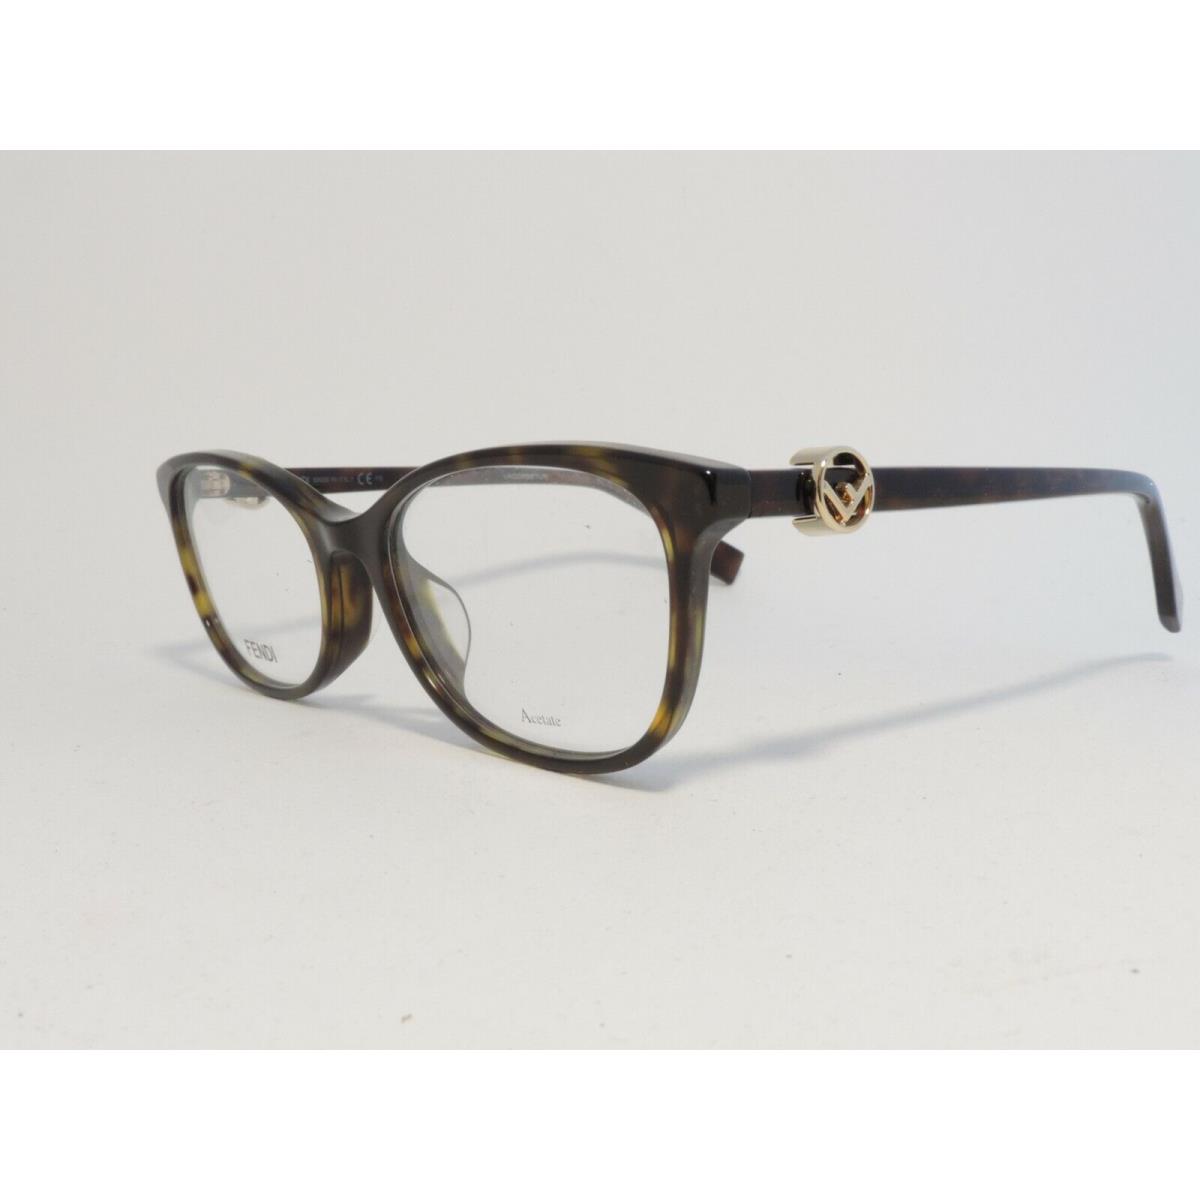 Fendi eyeglasses  - Brown Frame 0